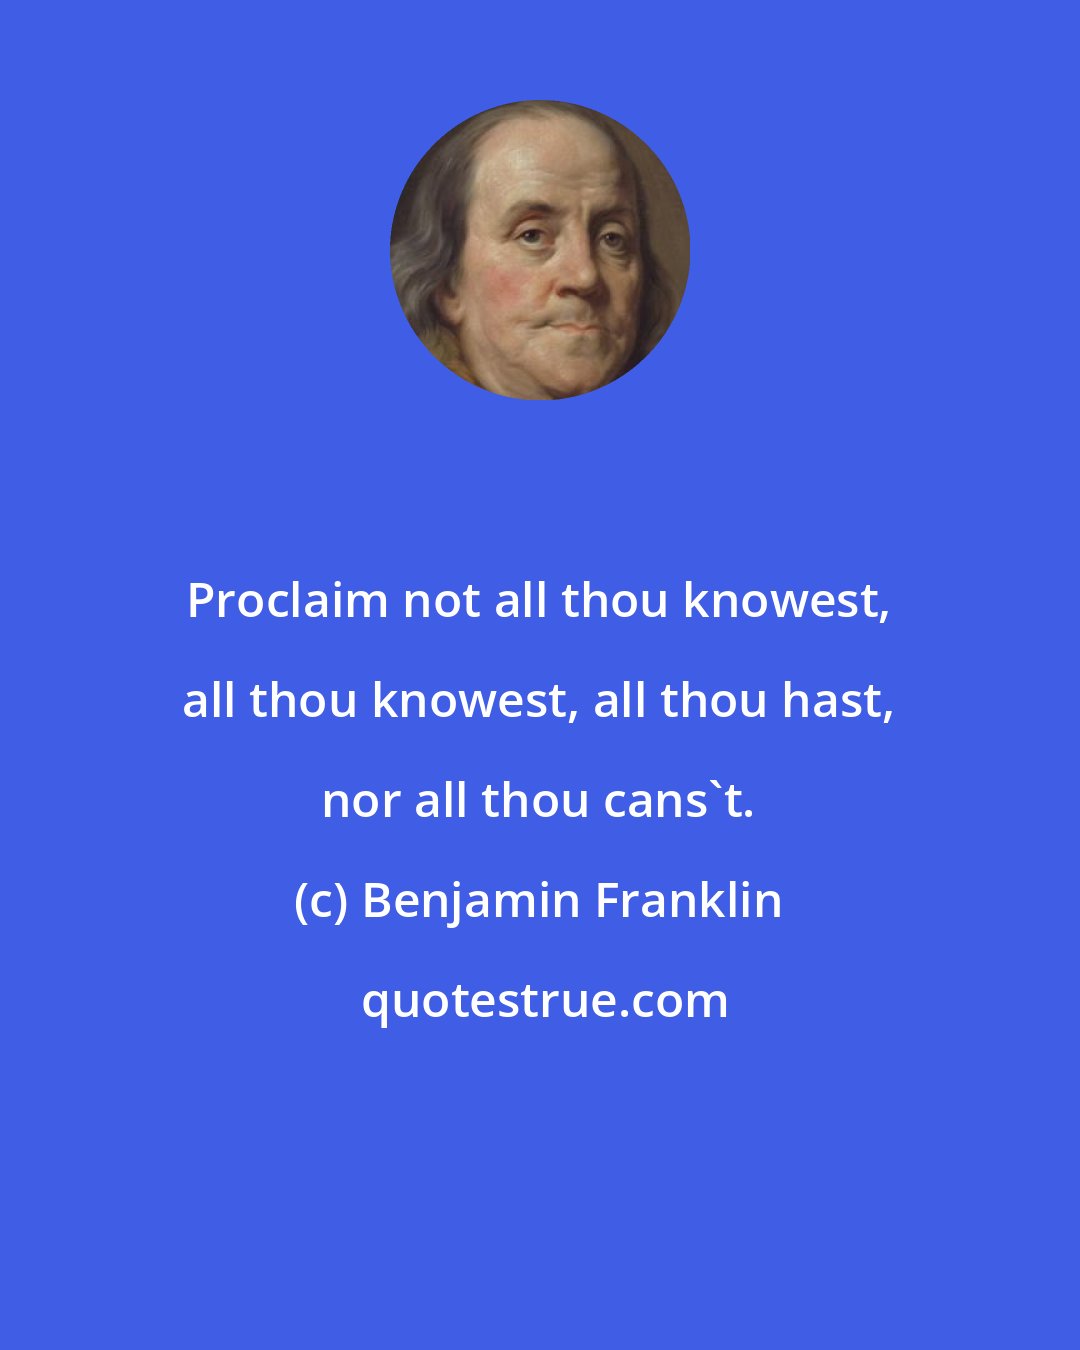 Benjamin Franklin: Proclaim not all thou knowest, all thou knowest, all thou hast, nor all thou cans't.